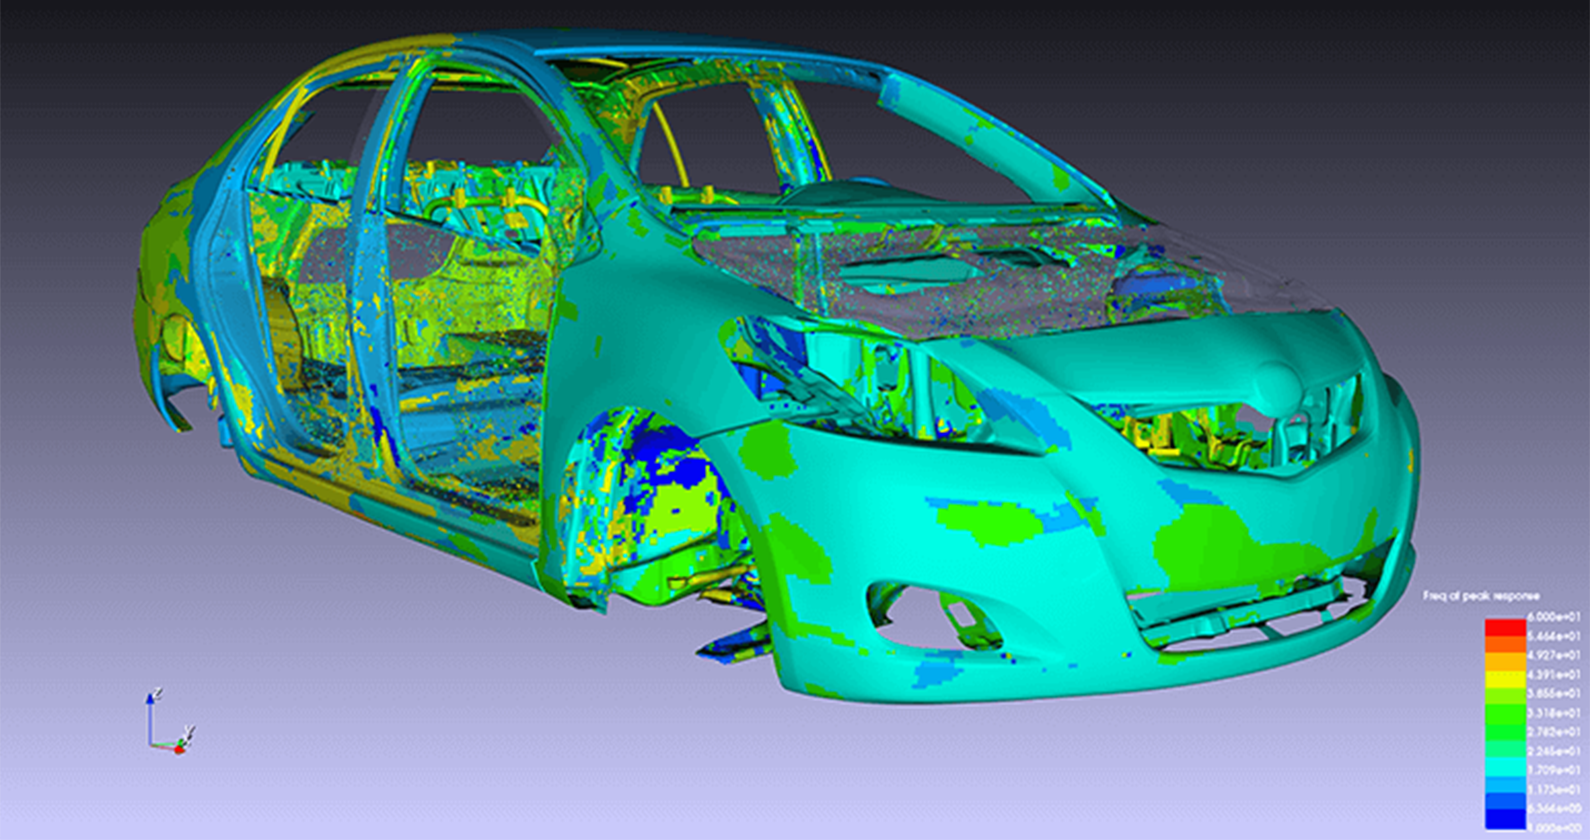 Image of simulation of car body